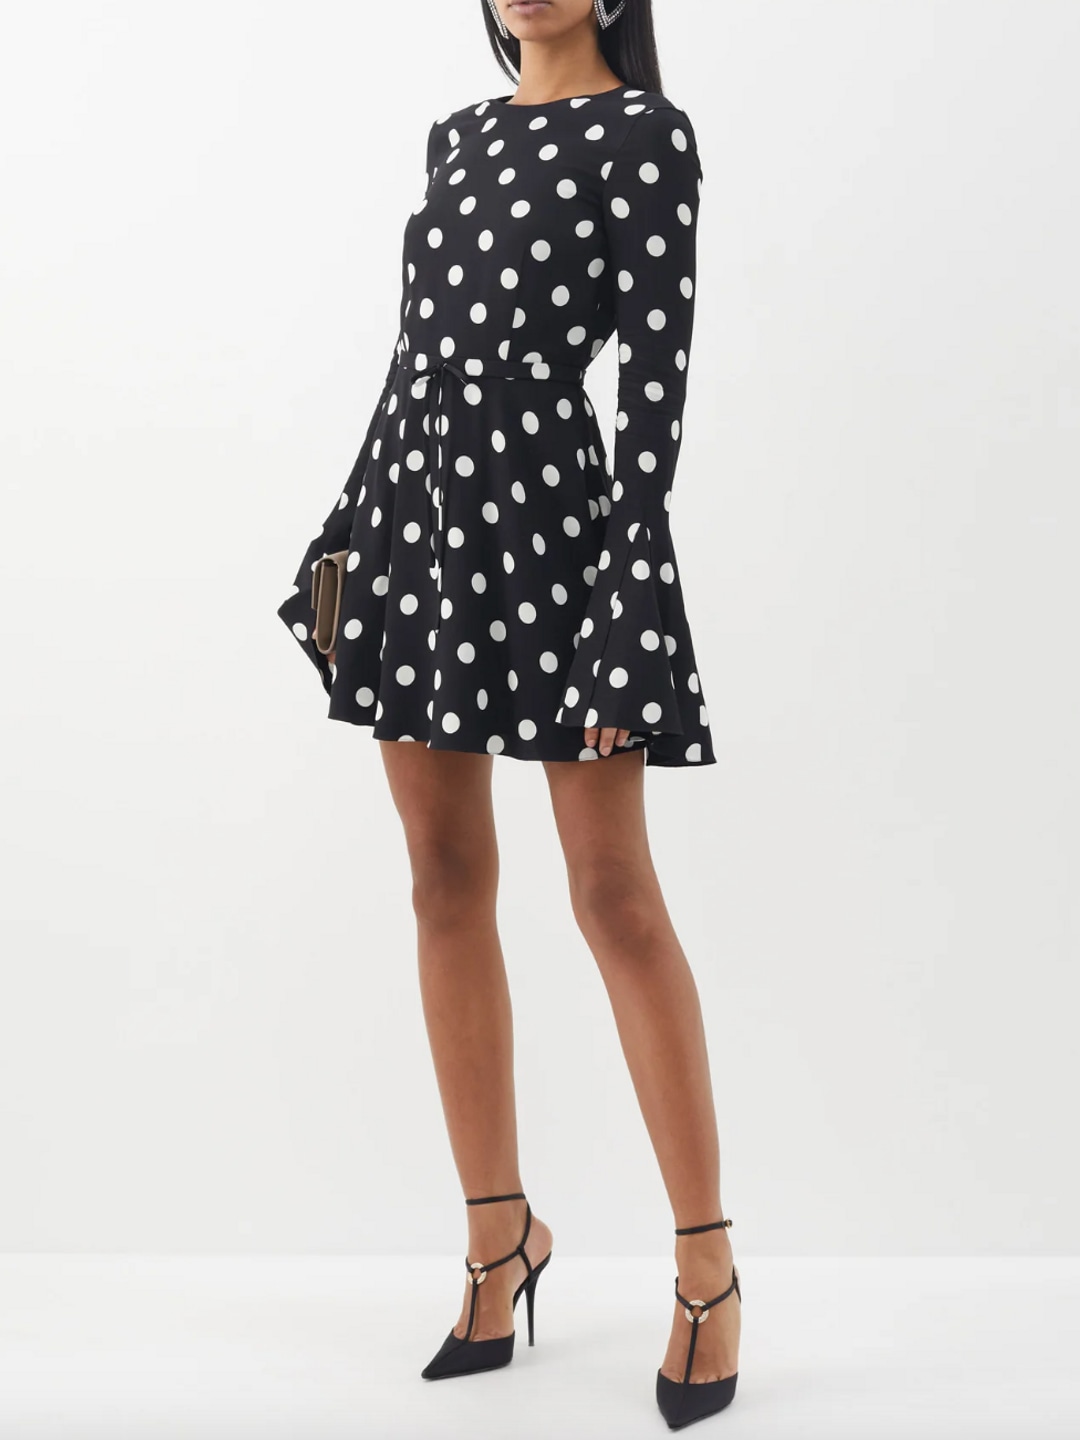 Model wearing polka dot mini dress 